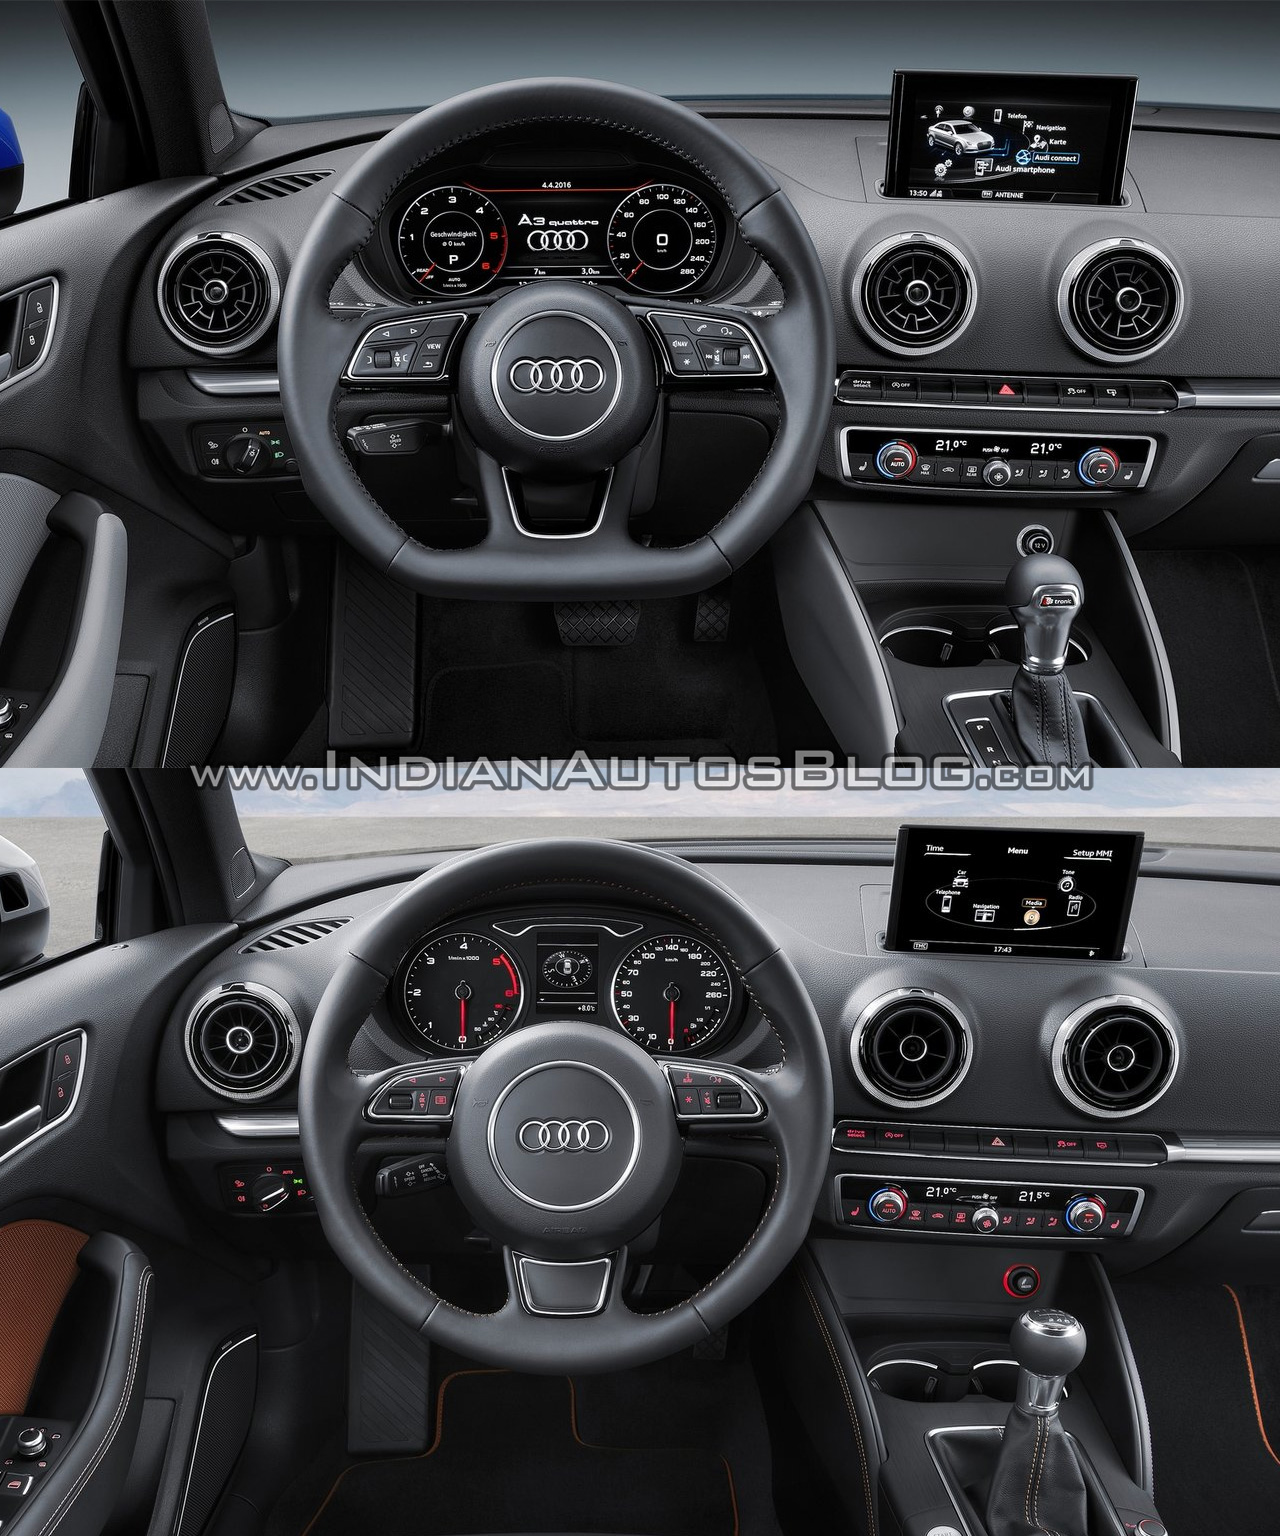 Audi A3 Sedan facelift - Old vs. New